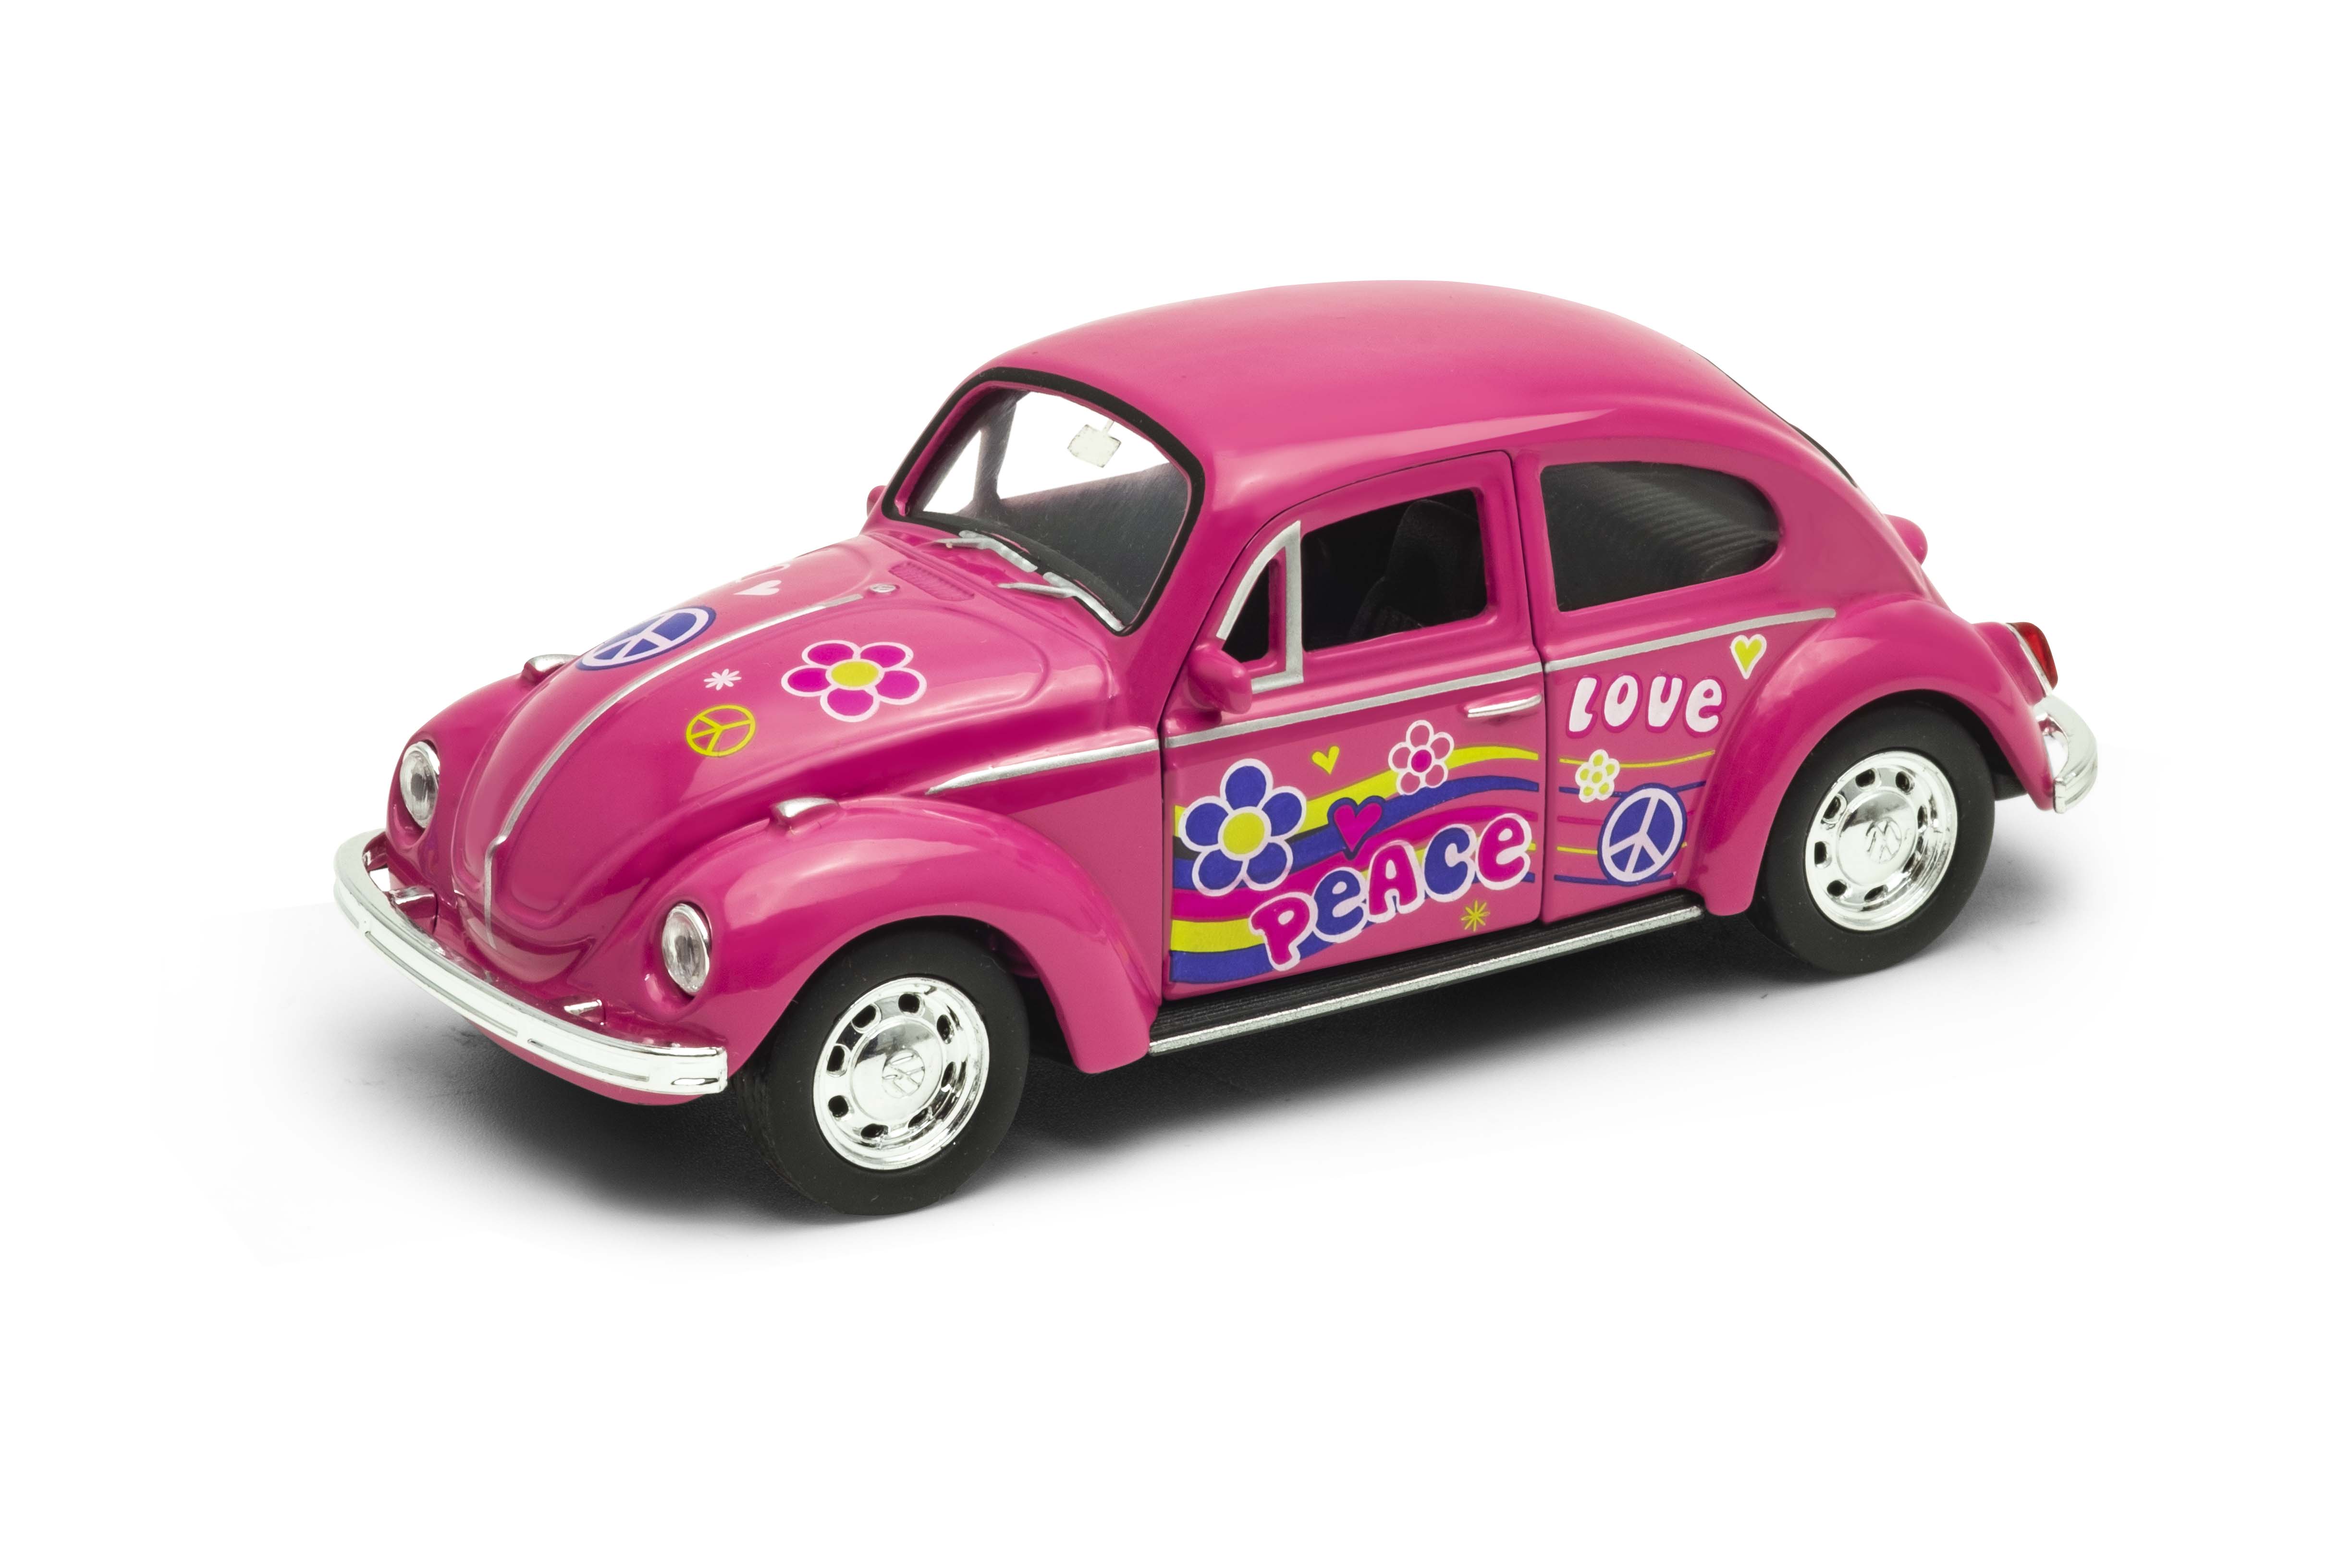 Welly Volkswagen Beetle model 1:34 růžový duhový